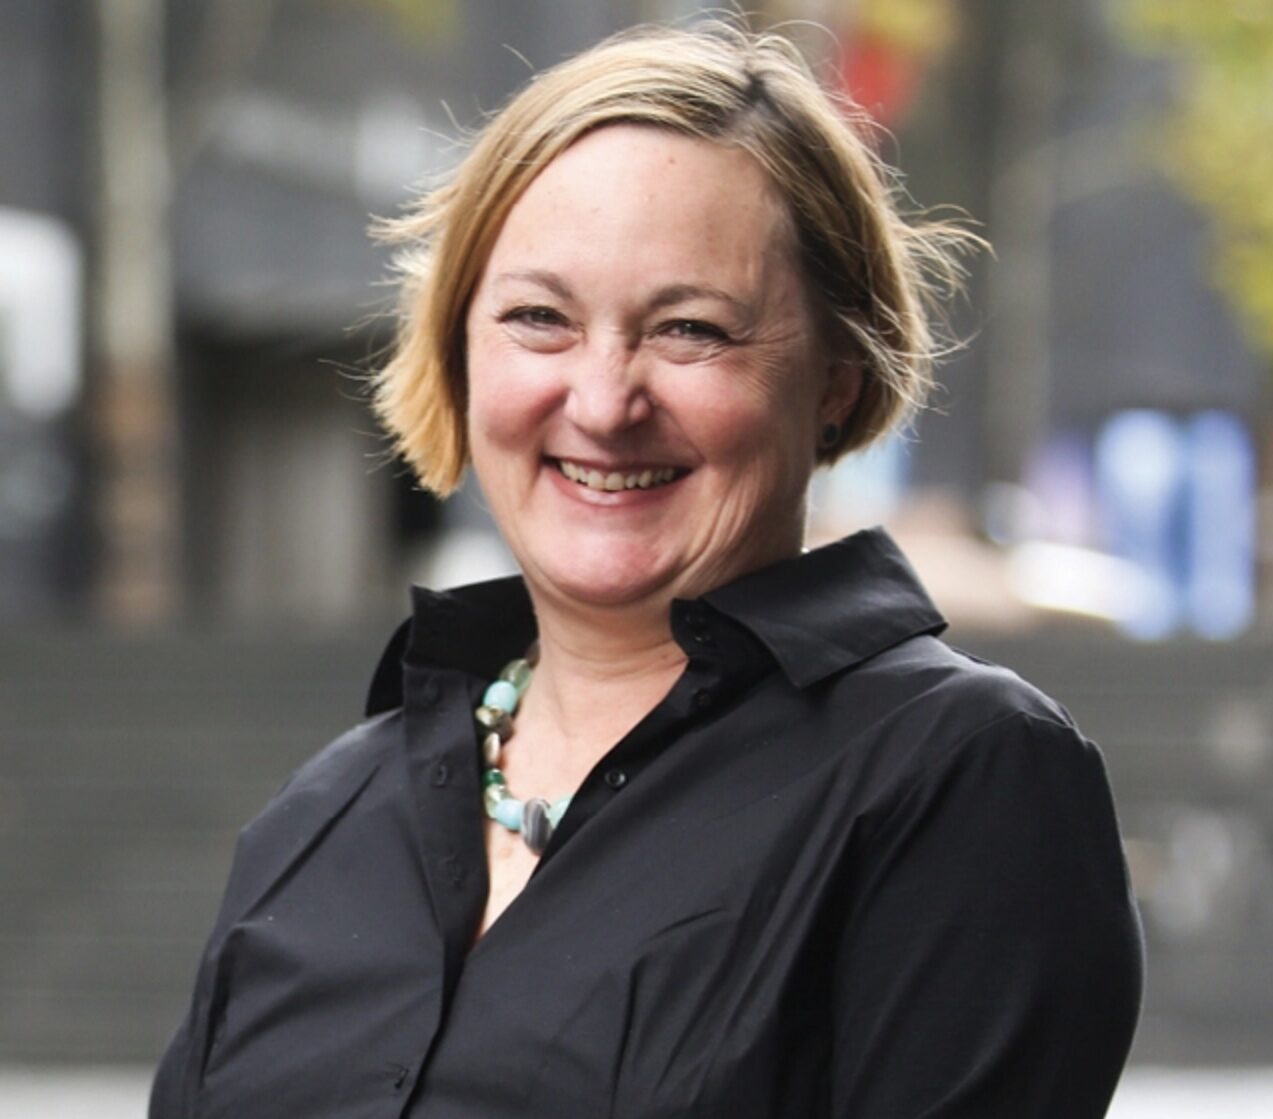 Sydney lawyer Shauna Jarrett wins Liberal preselection, confirms run for mayor